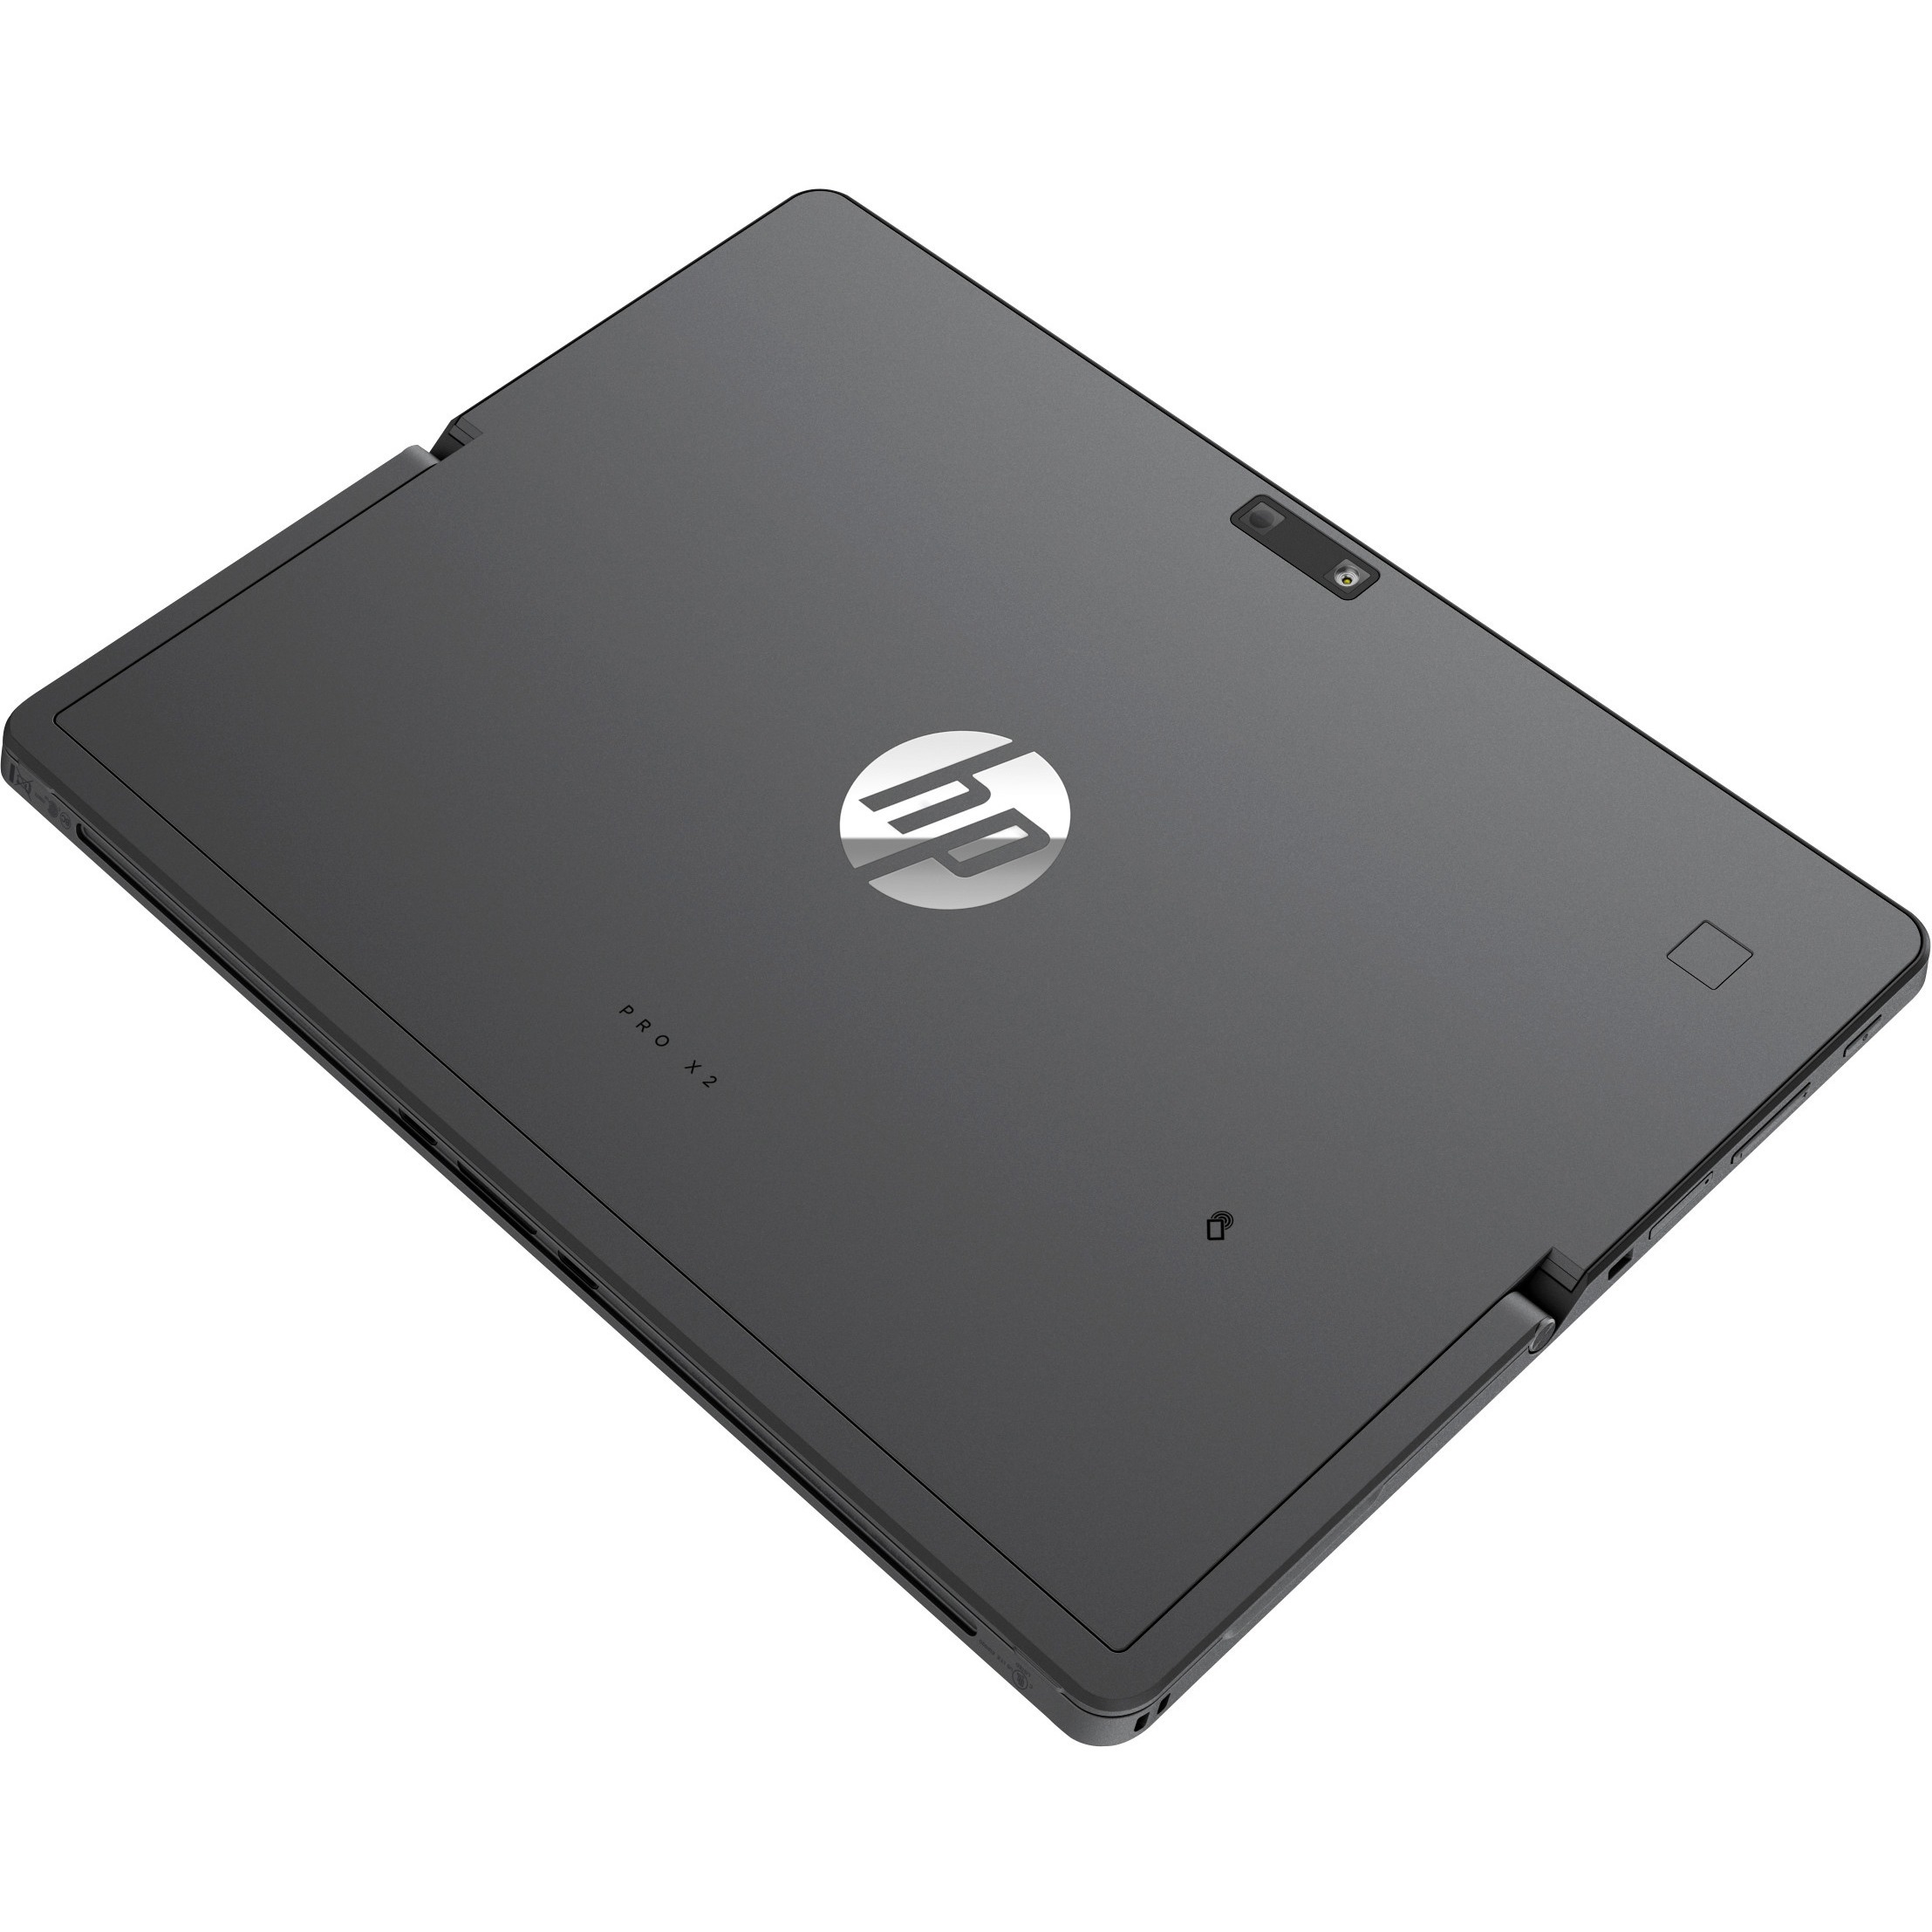 HP Pro x2 612 G2 Tablet - 12